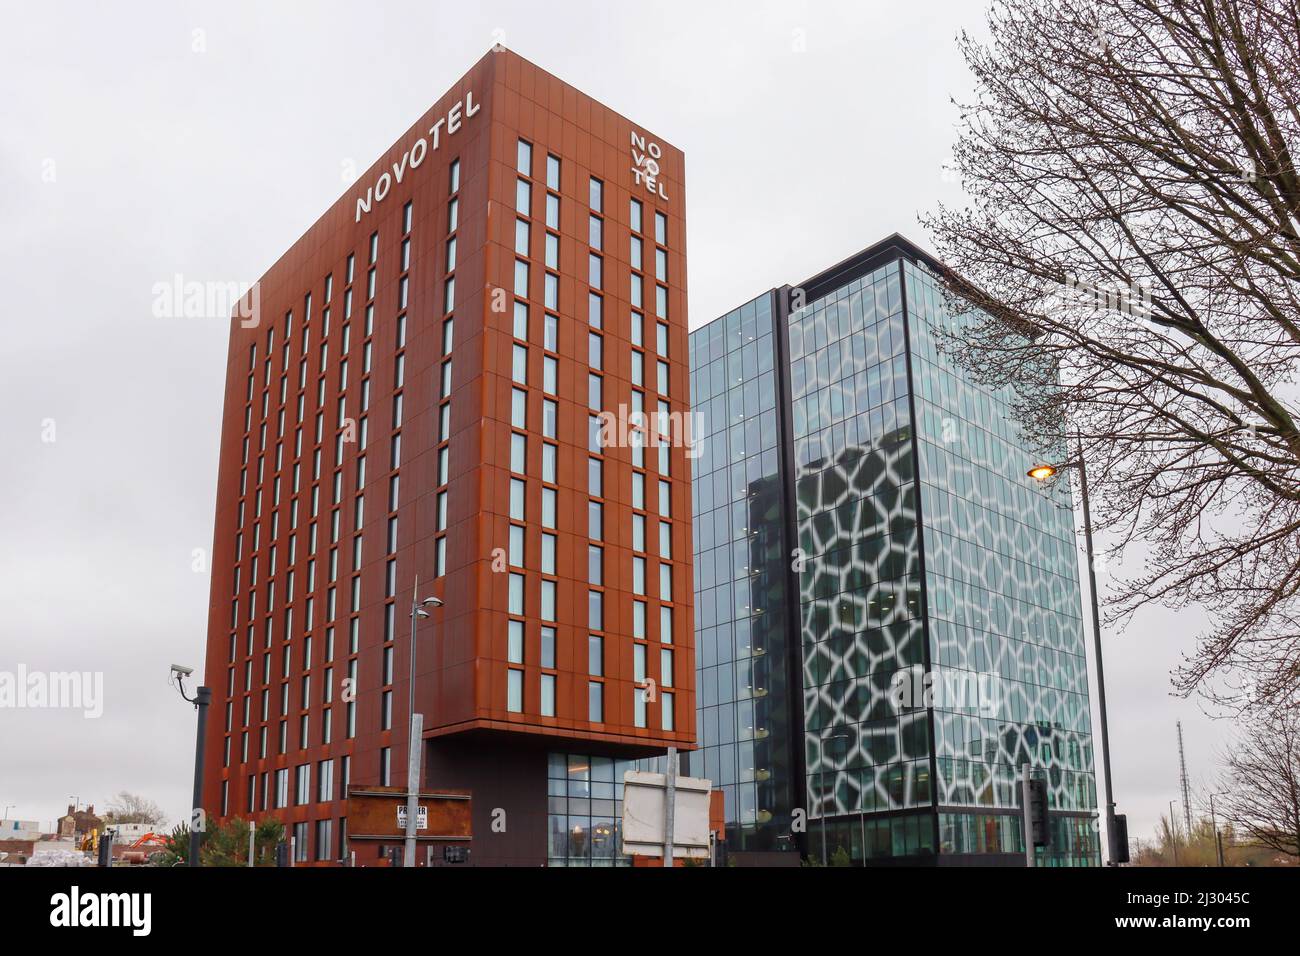 Novotel / The spine Building, Smithdown Lane, Paddington Village, Liverpool City Centre Foto Stock